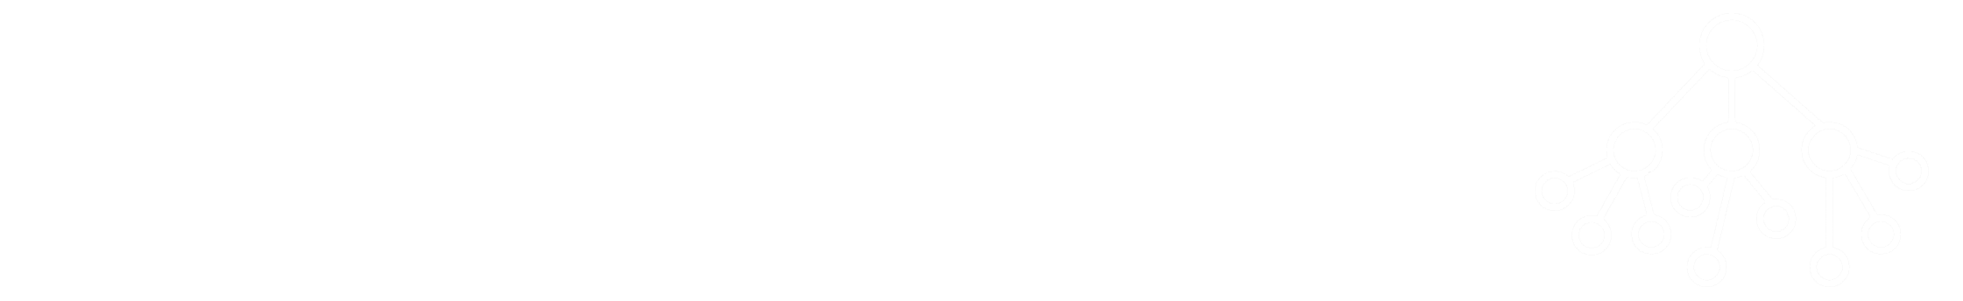 Gospel Share Missions